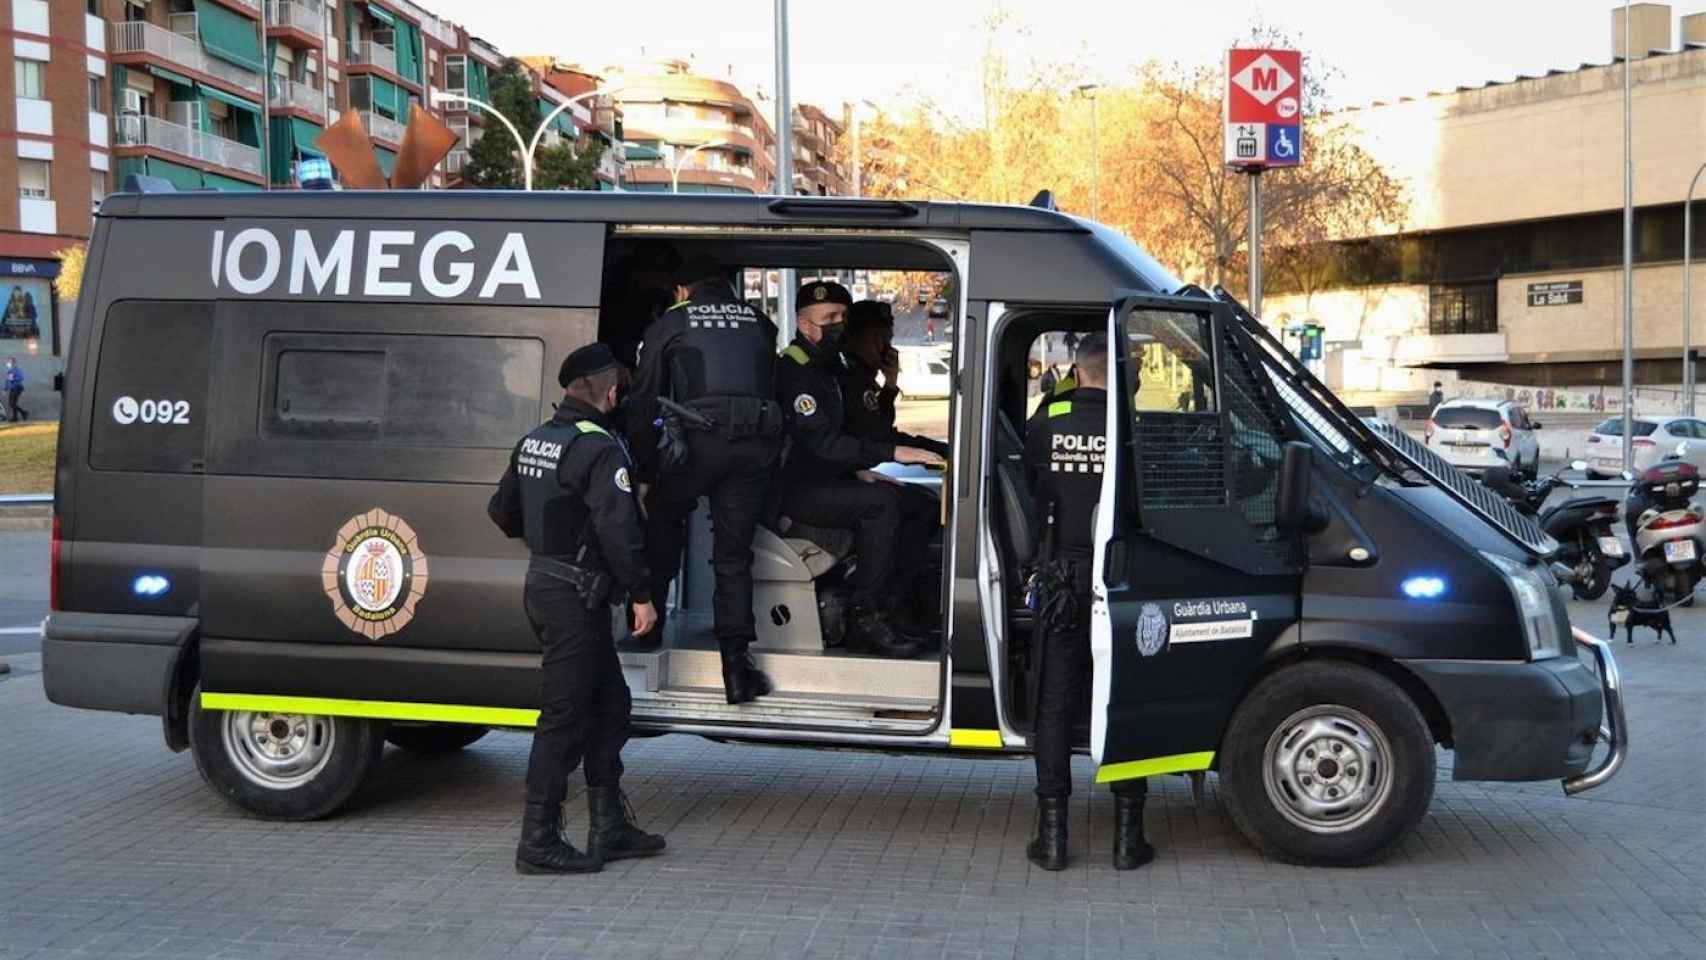 La furgoneta de la Unidad Omega de la Guardia Urbana de Badalona. / AYUNTAMIENTO DE BADALONA